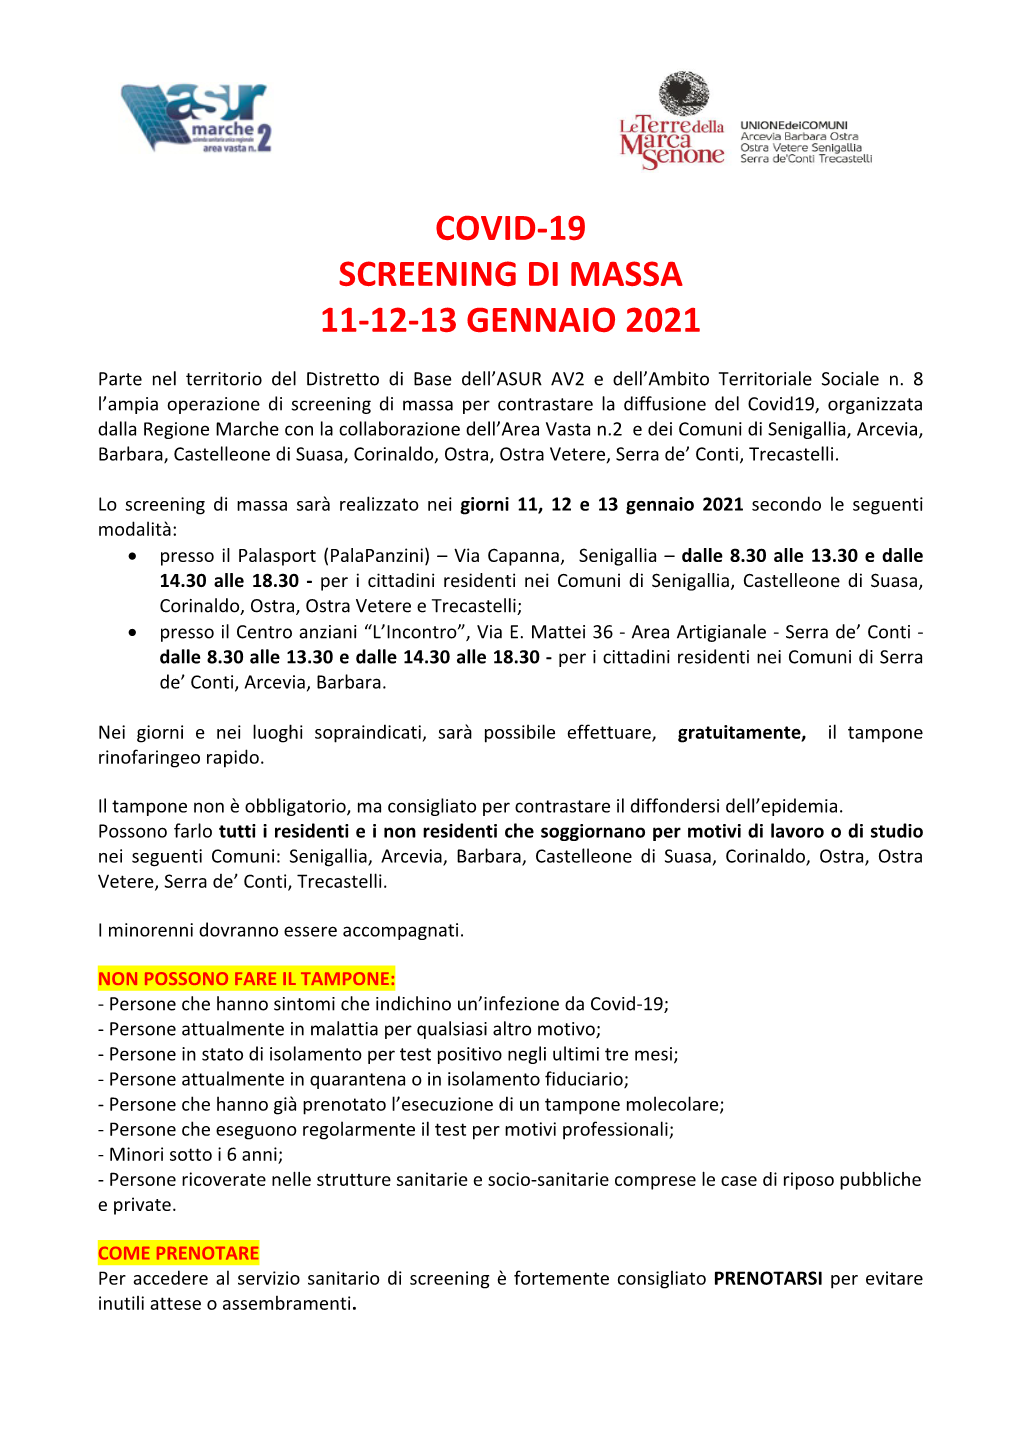 Covid-19 Screening Di Massa 11-12-13 Gennaio 2021